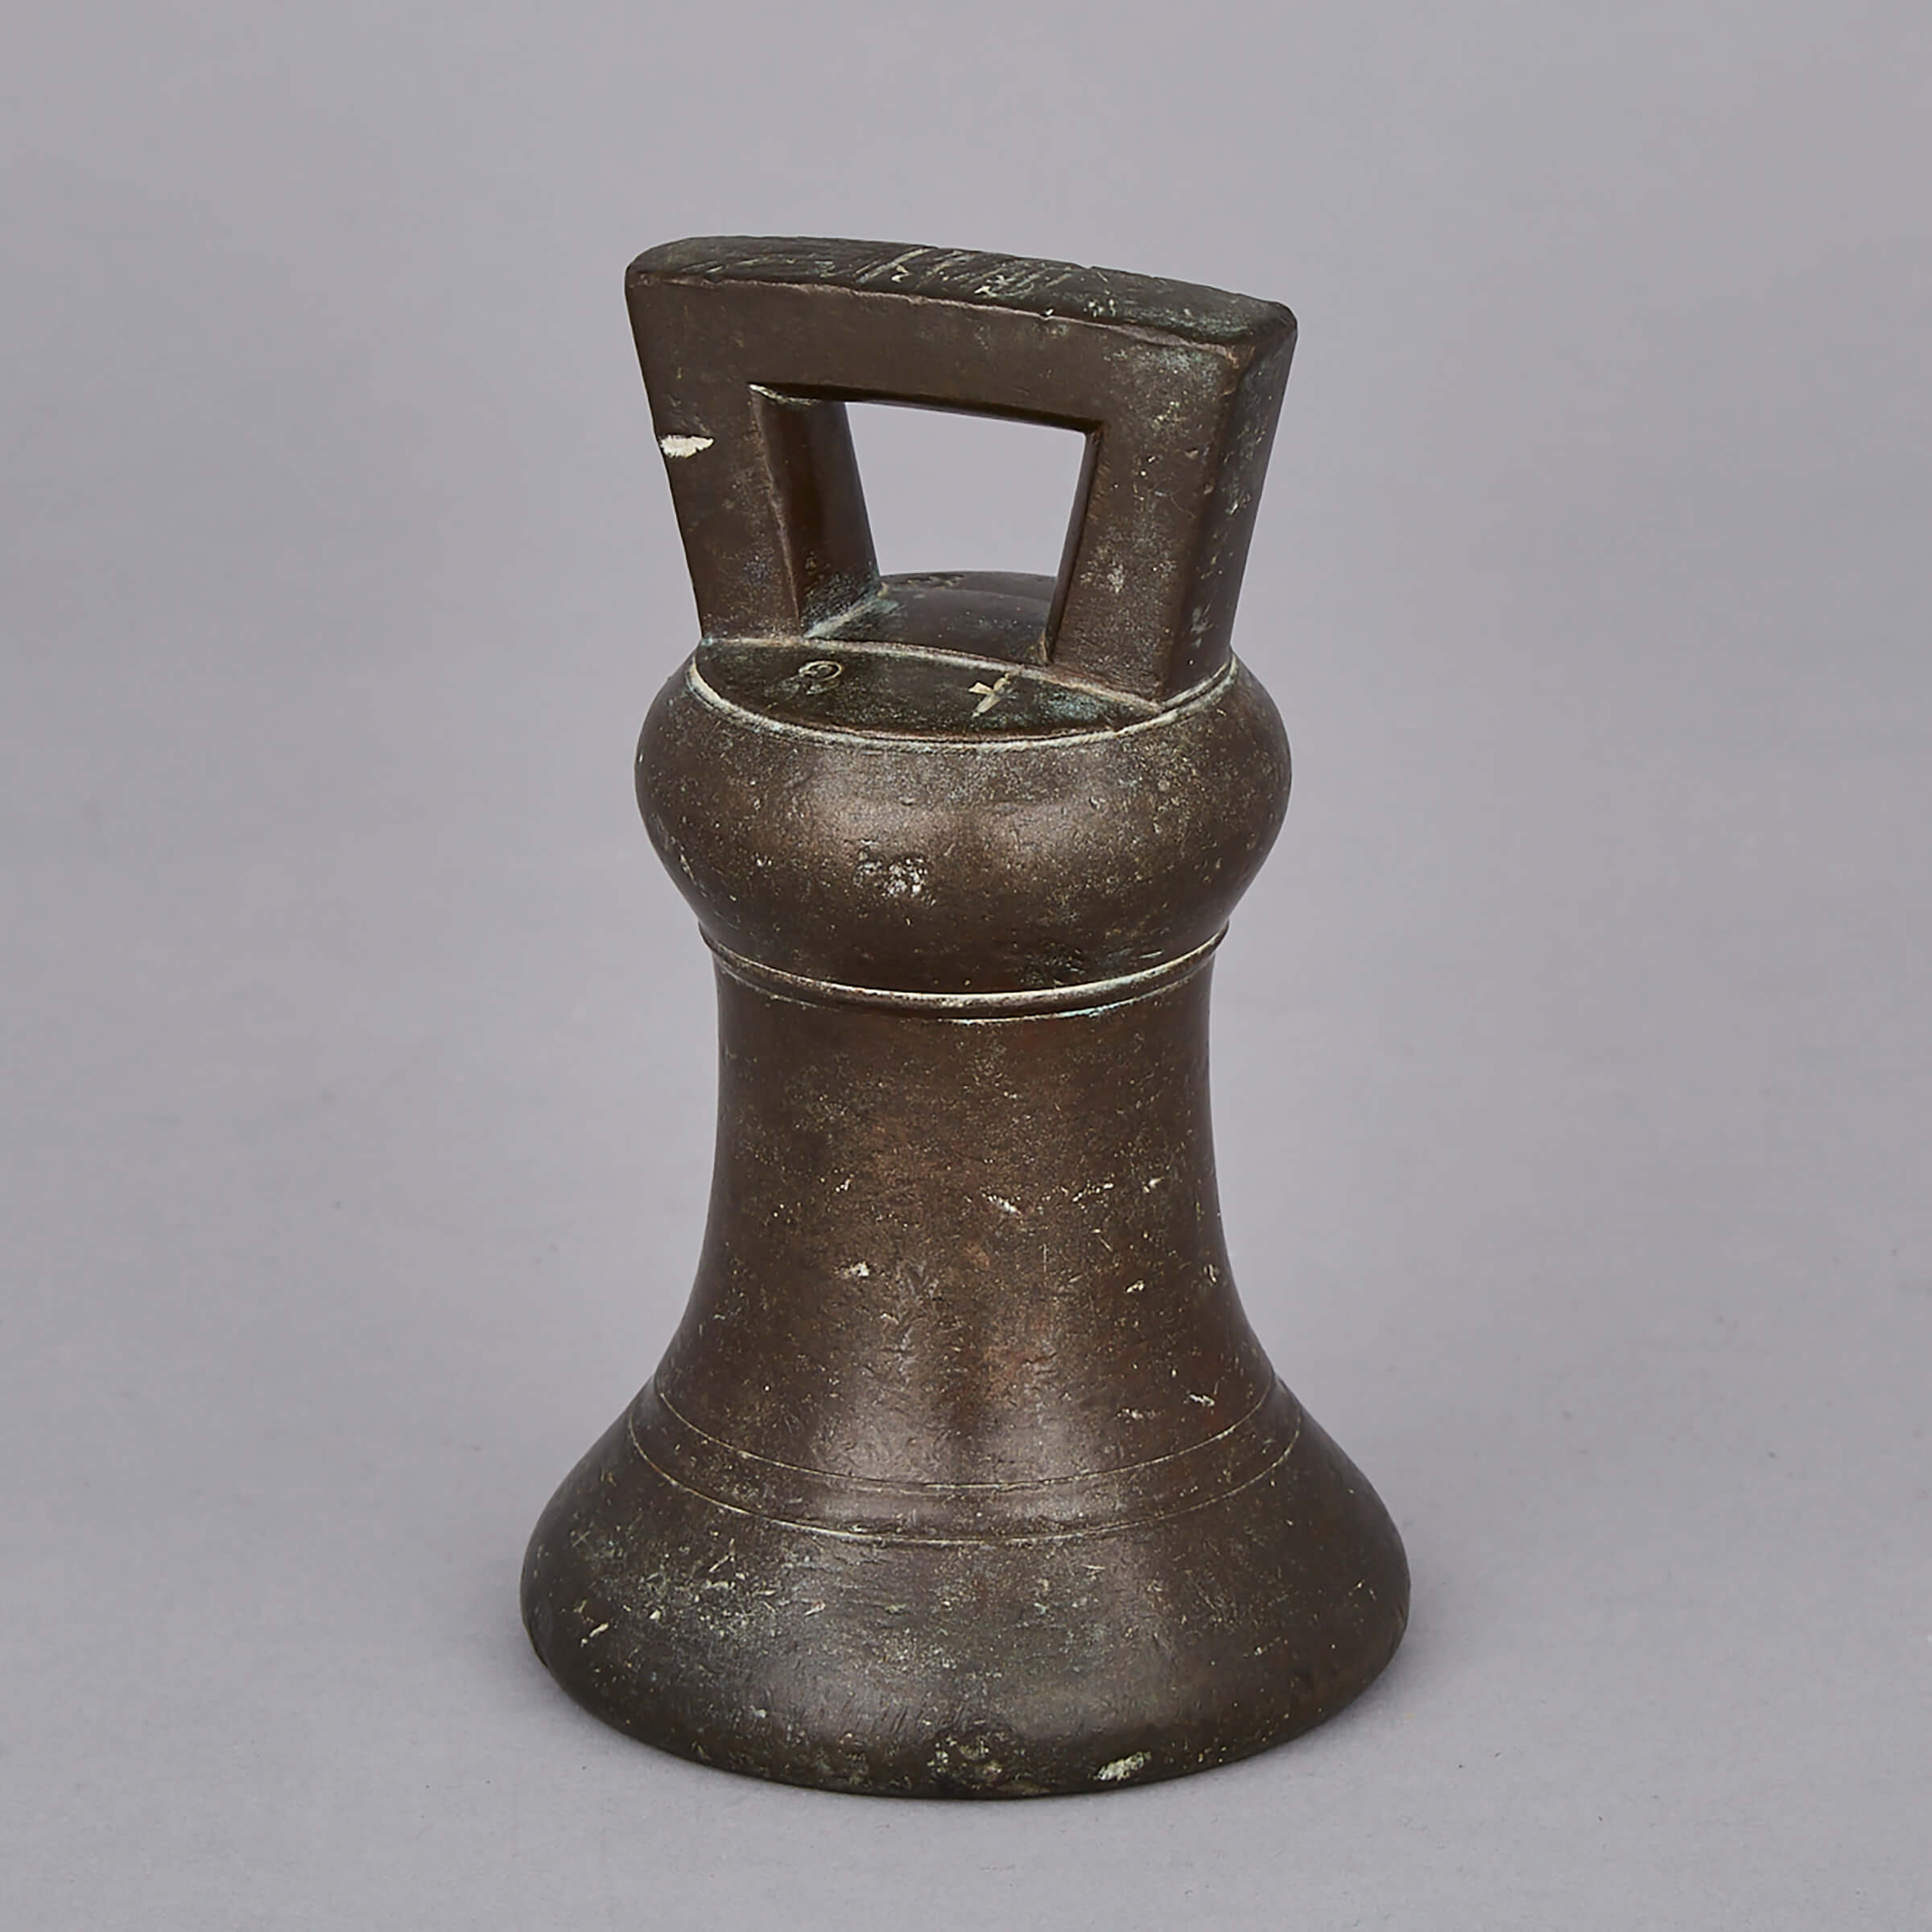 English Bronze Sealer’s Bell Weight, 18th century